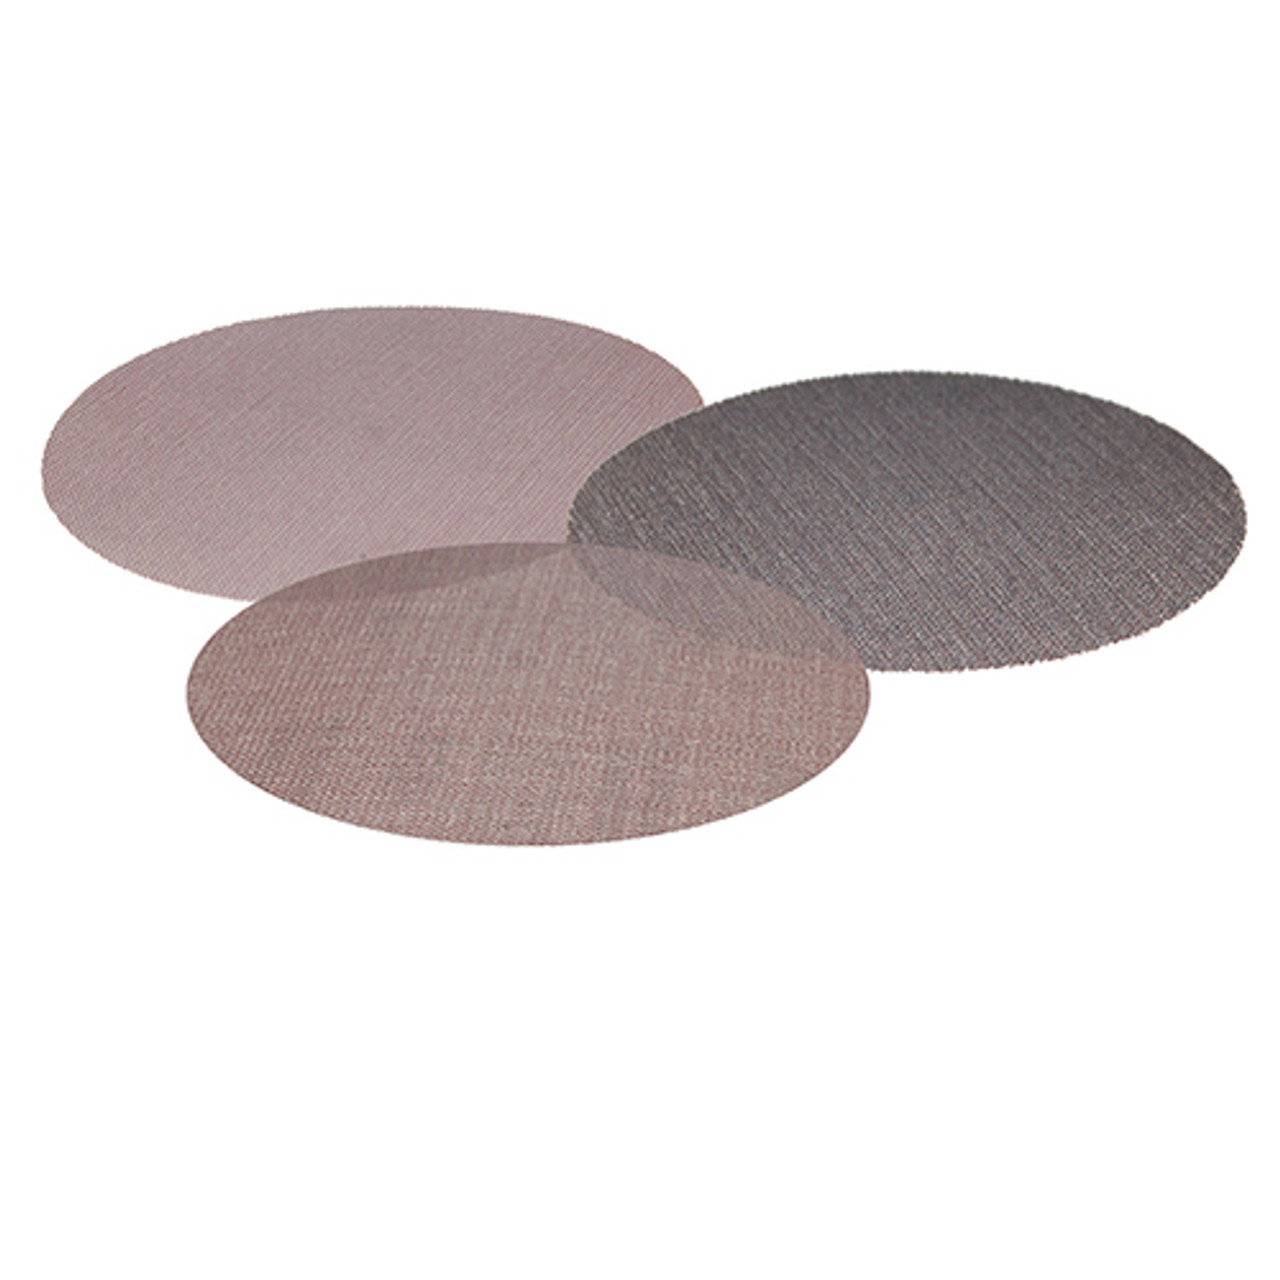 Klingspor Abrasives Klingnet, 800 Grit, Aluminum Oxide, Hook & Loop, 3" Discs, 25pk